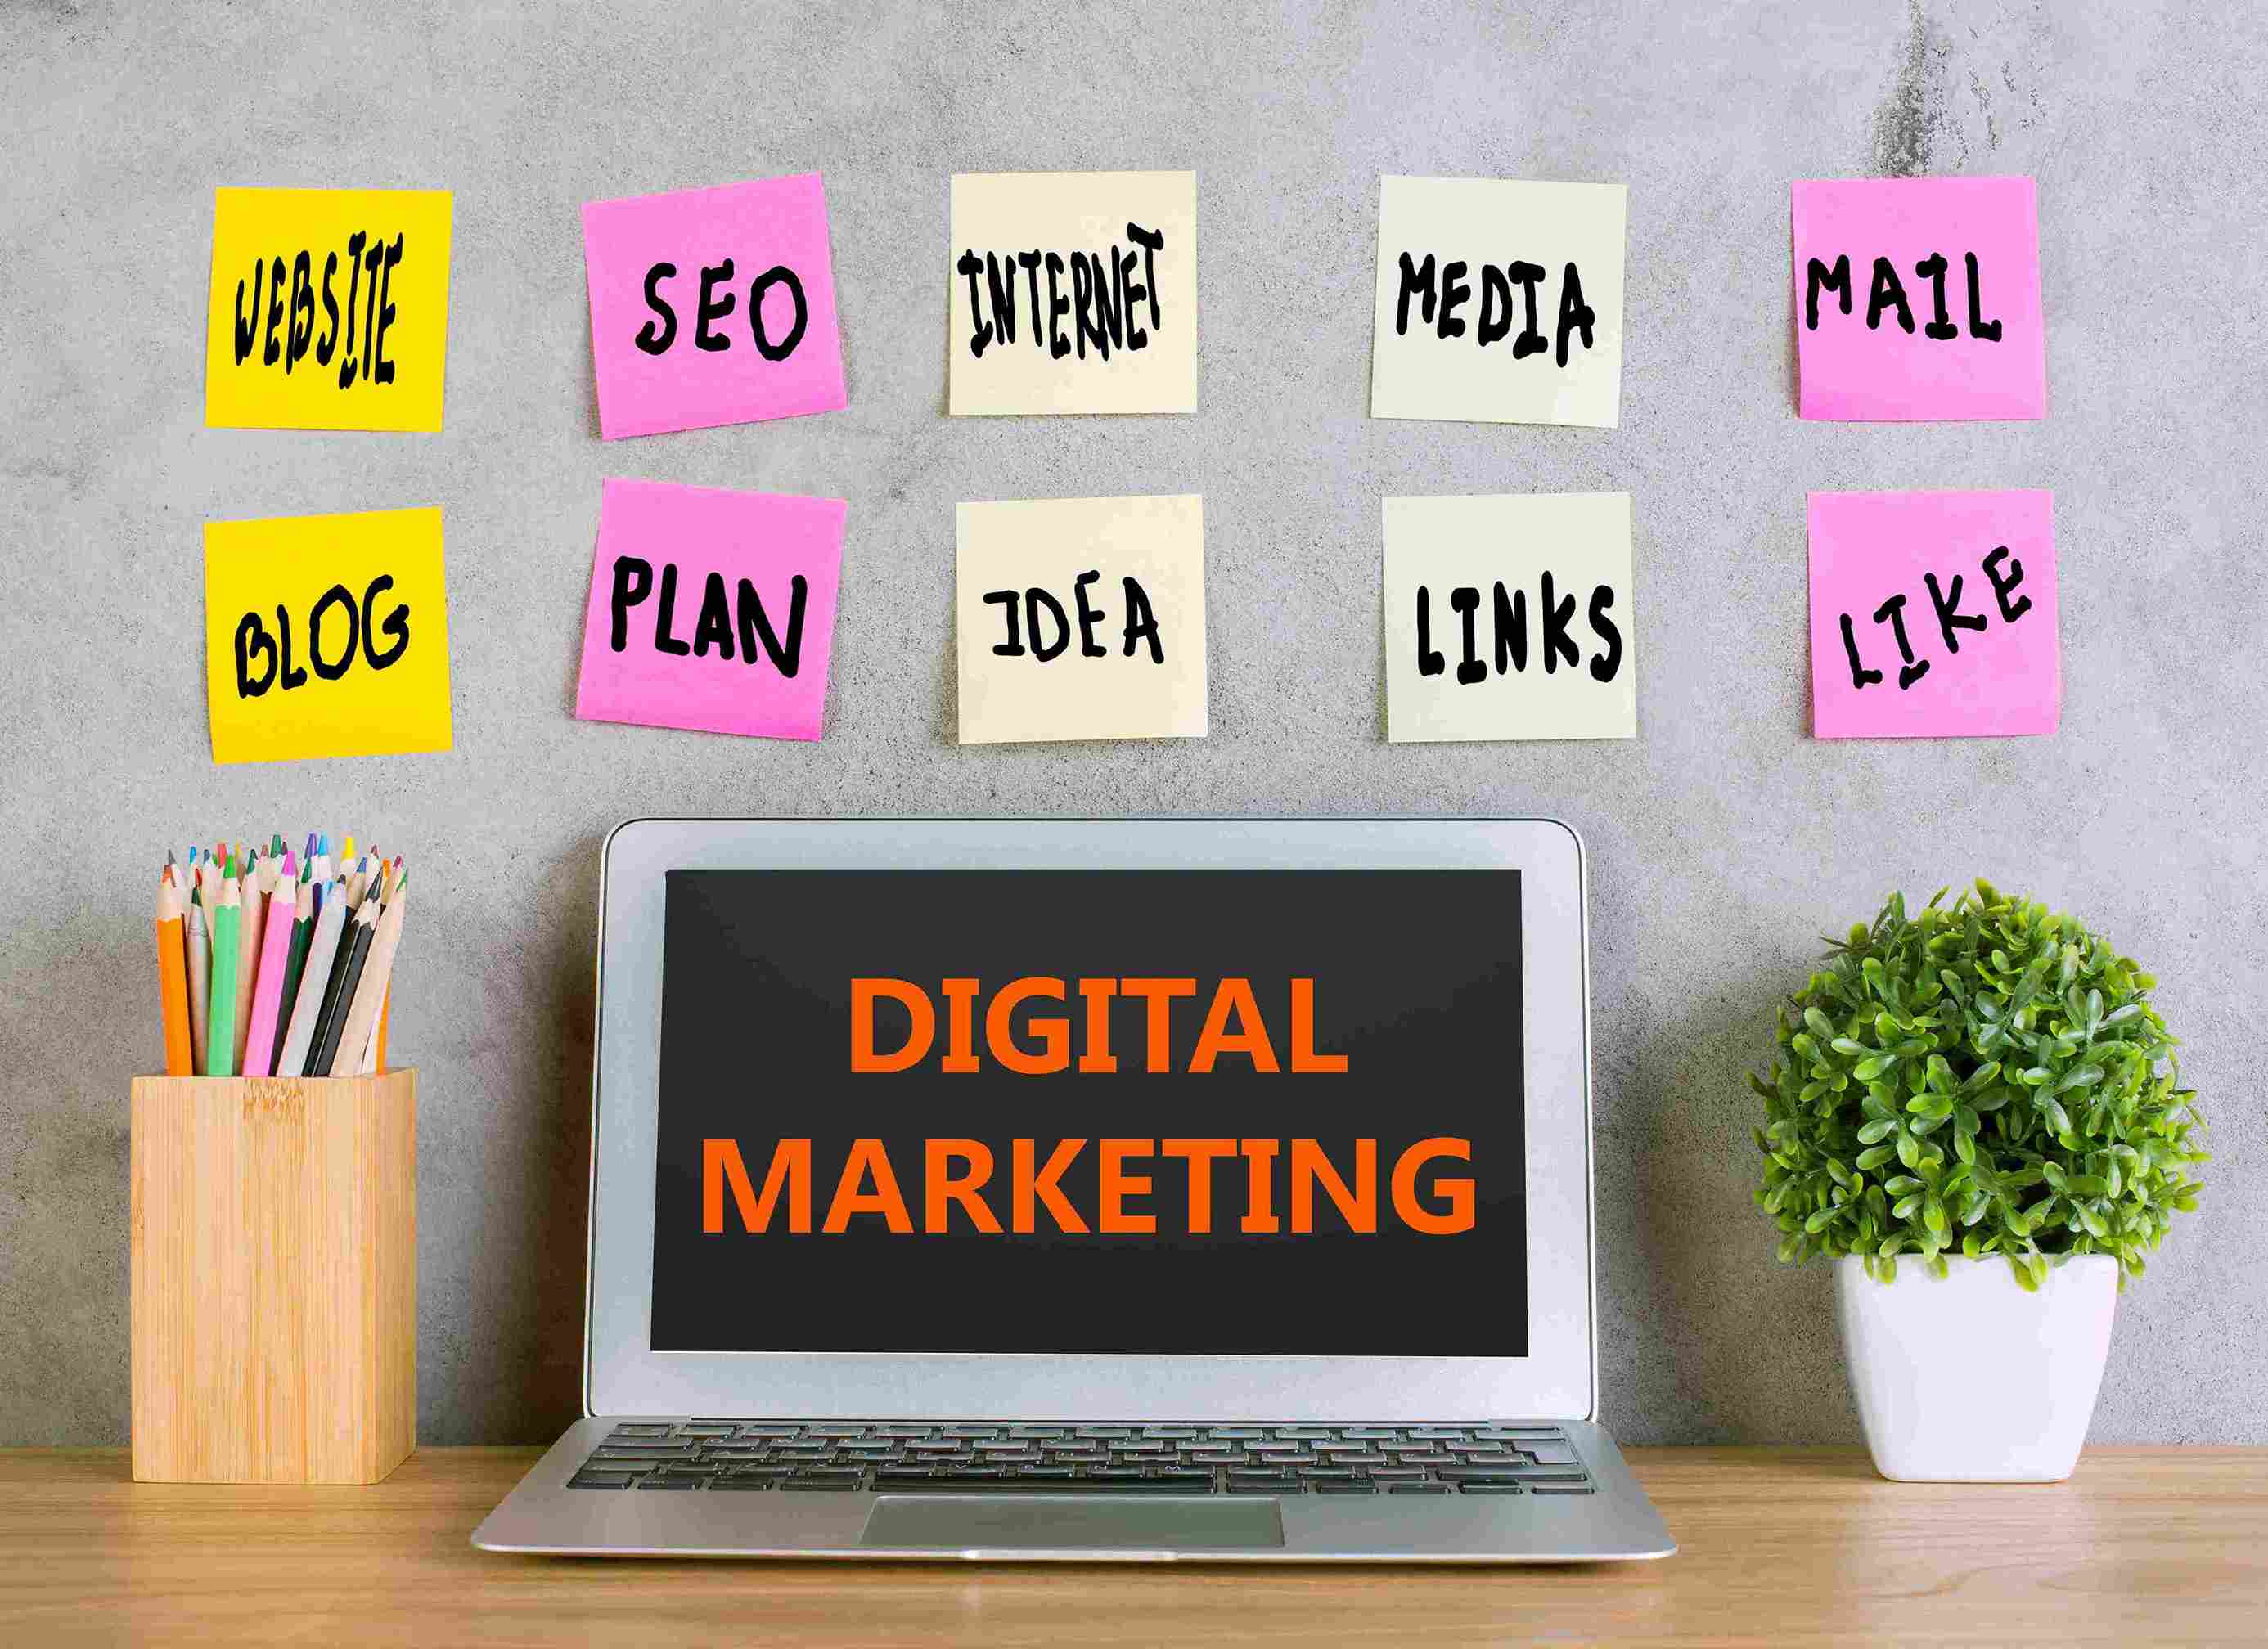 Digital marketing strategy